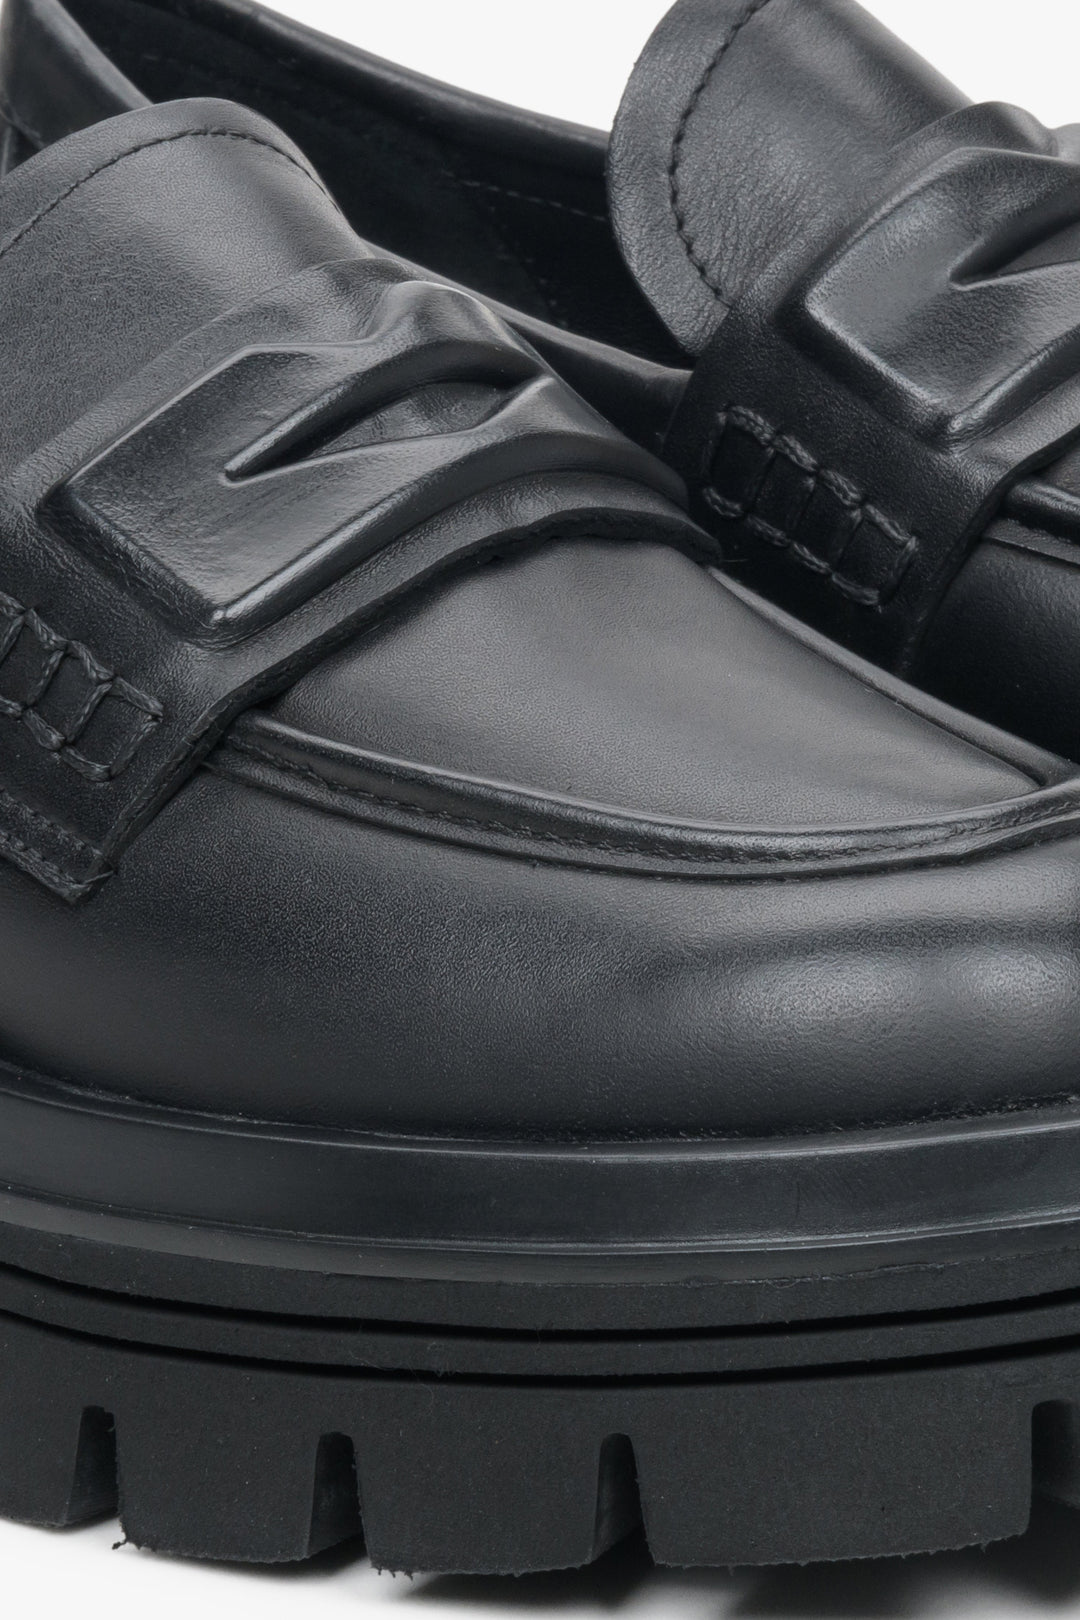 Women's slip-on black moccasins by Estro - close-up on details.